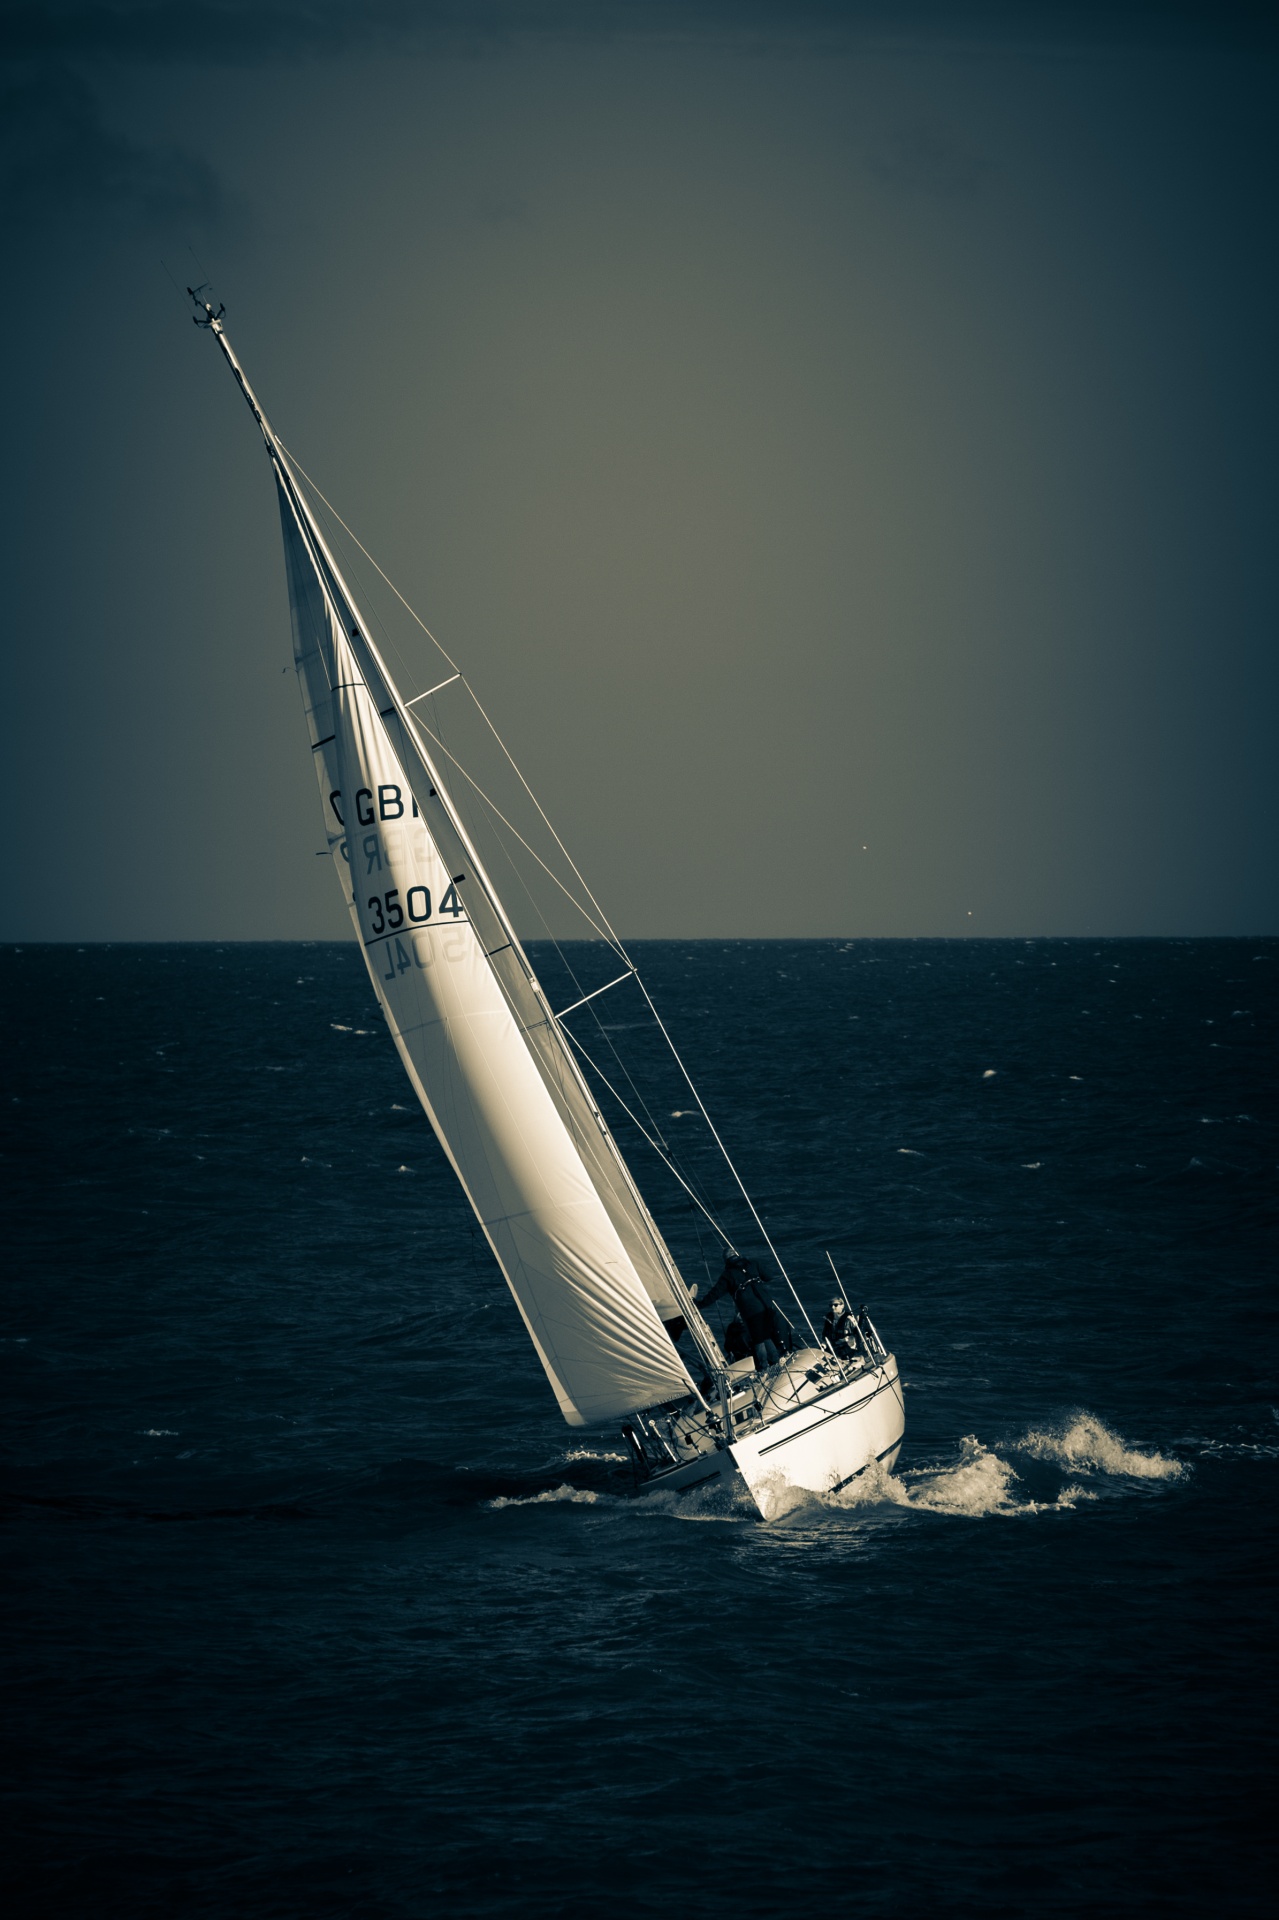 sailboat free stock images